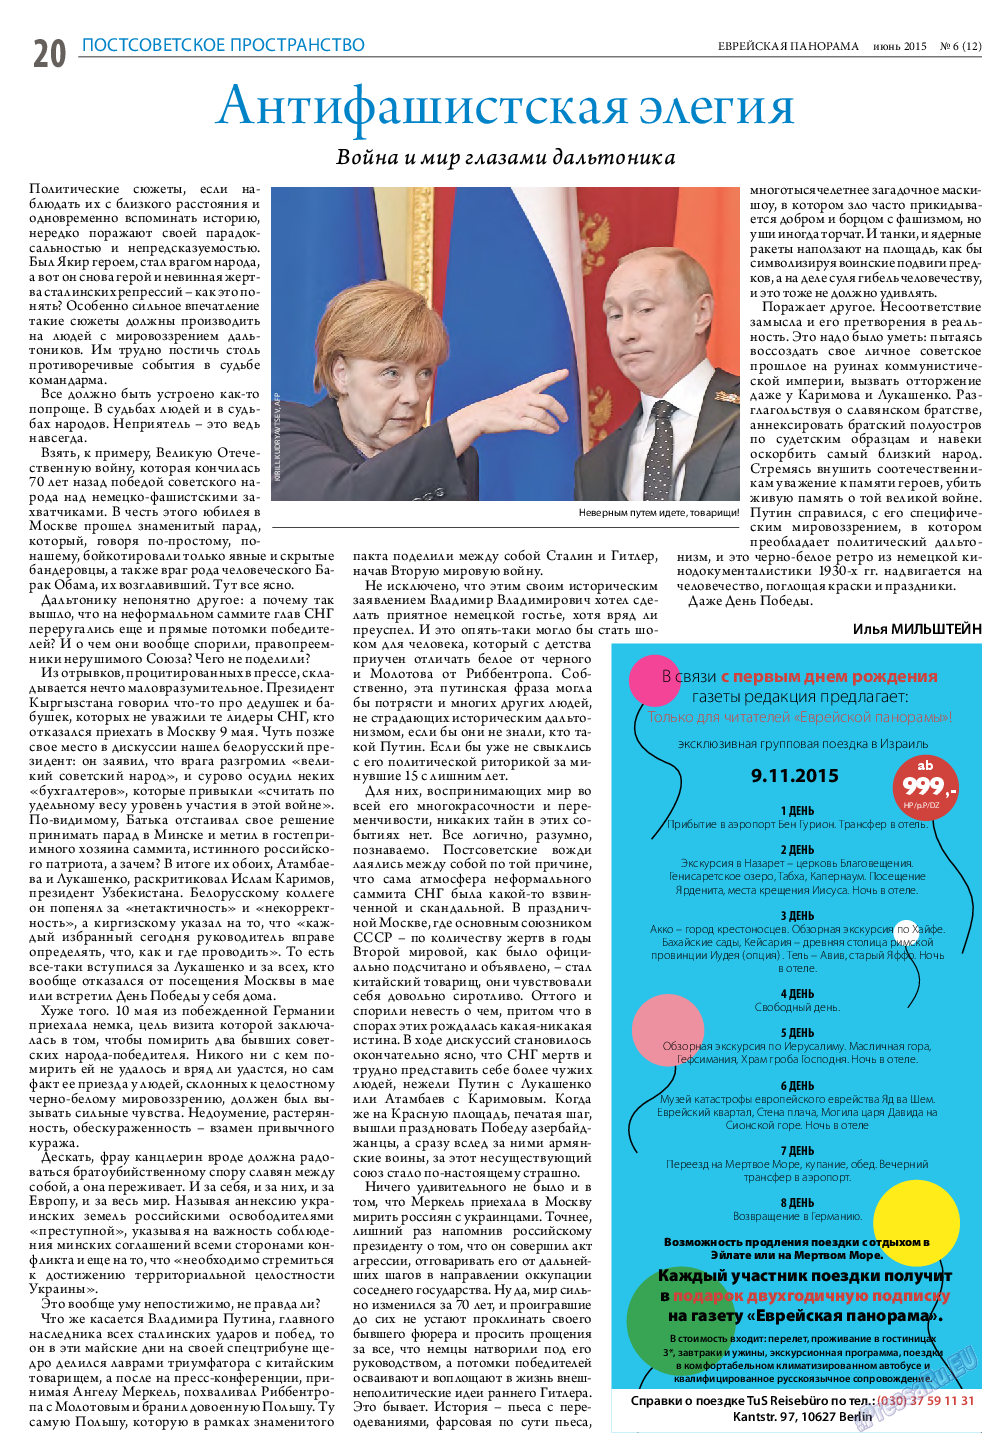 Еврейская панорама, газета. 2015 №6 стр.20